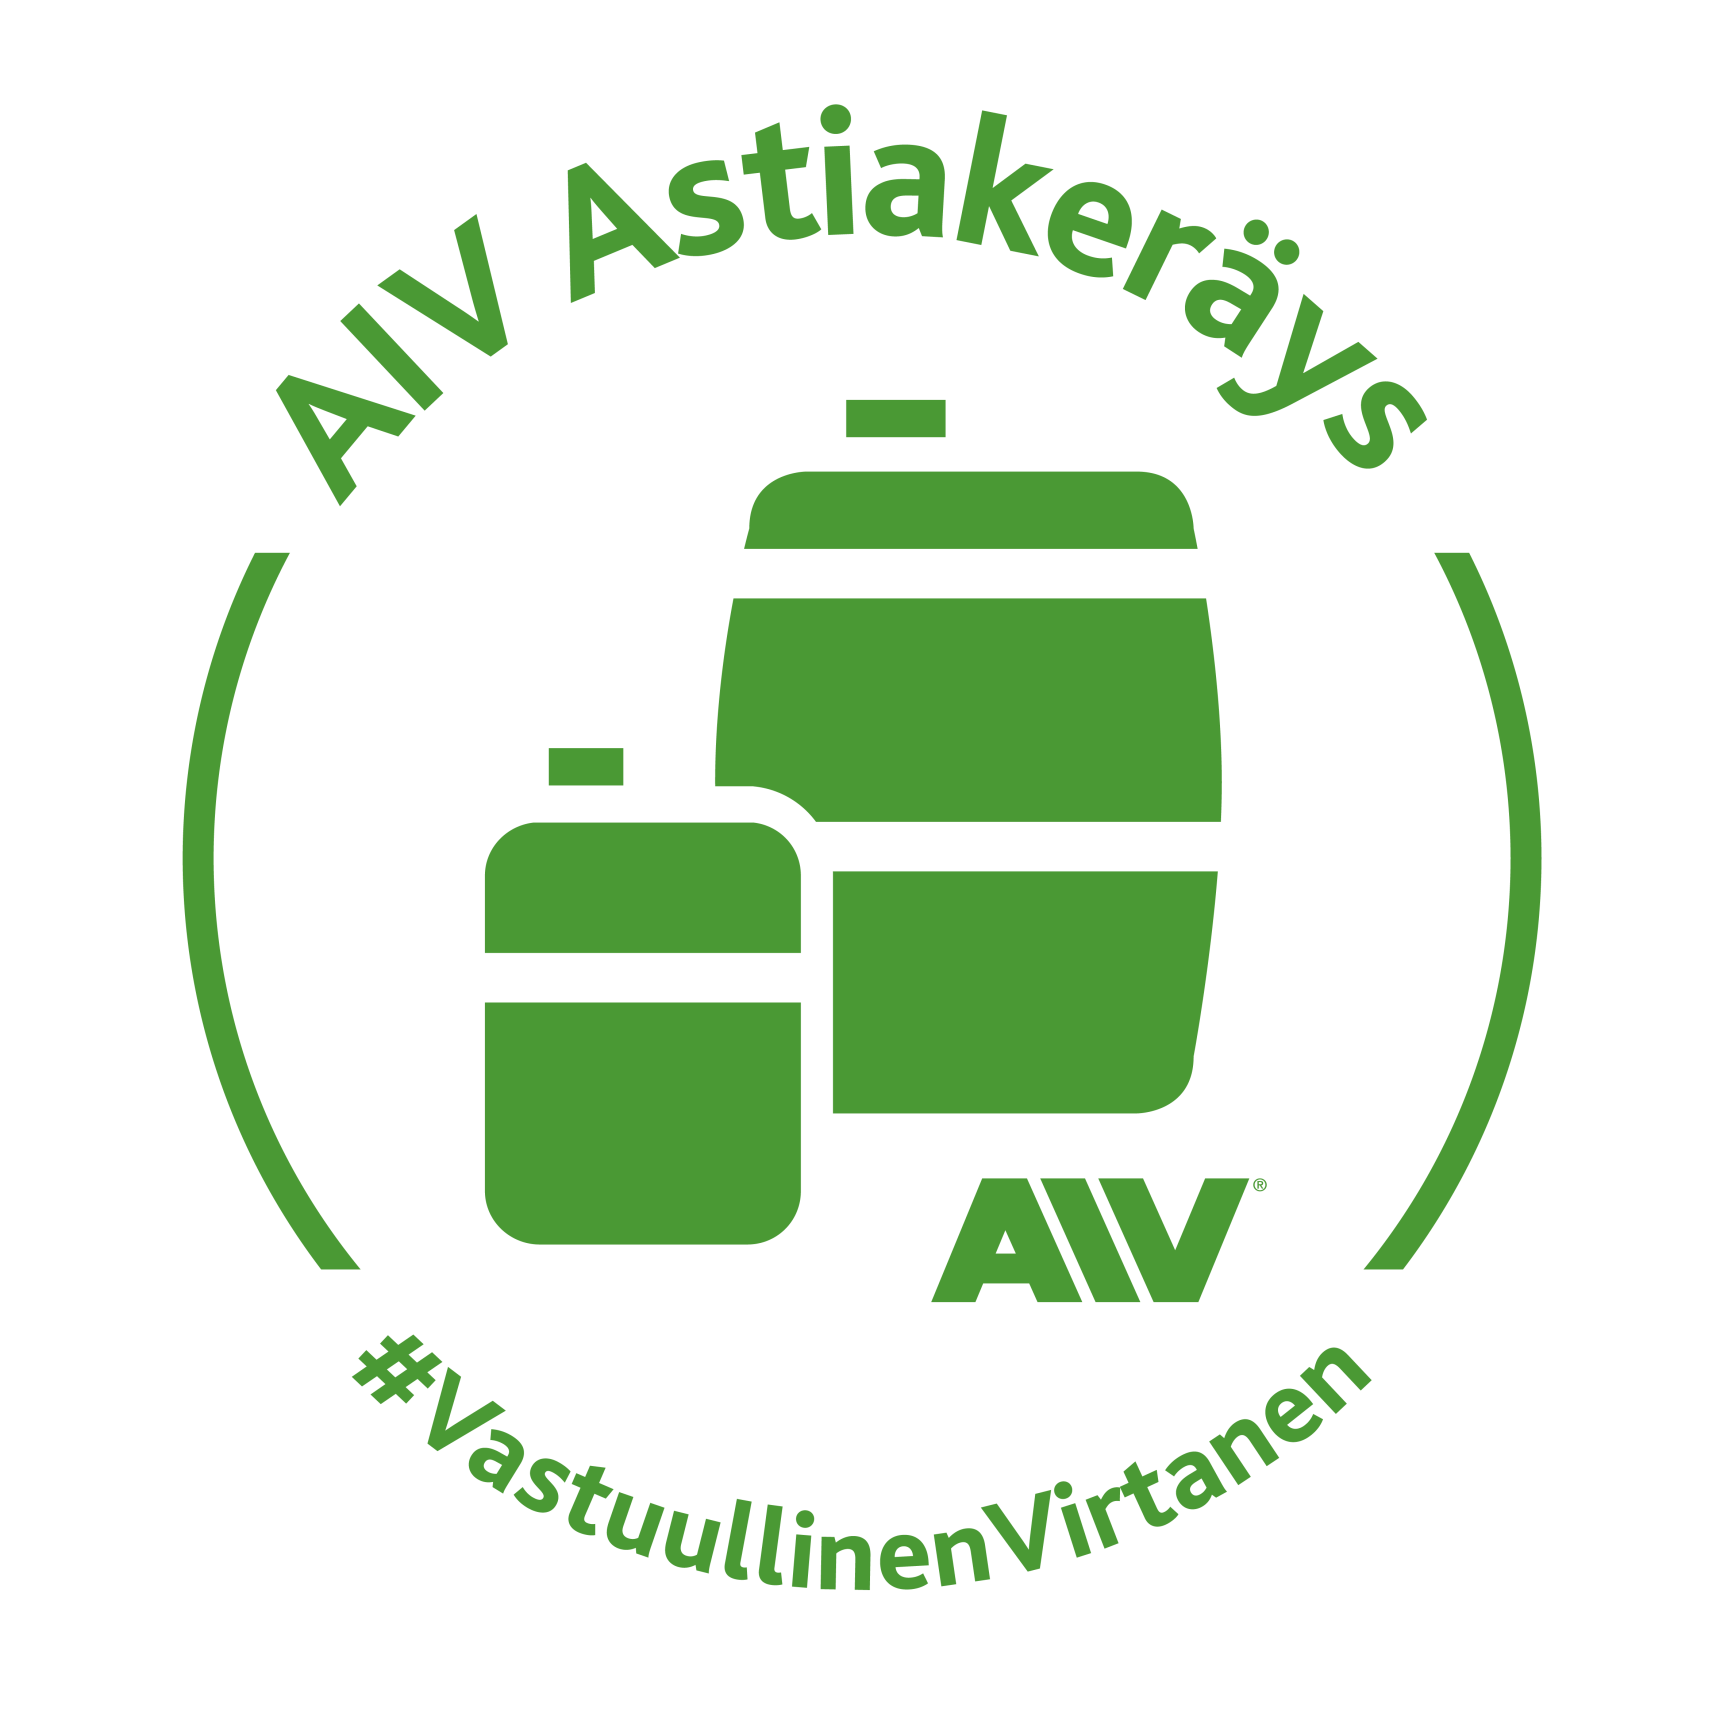 AIV-astiakerays-kampanjatunnus-e1466059341276.jpg